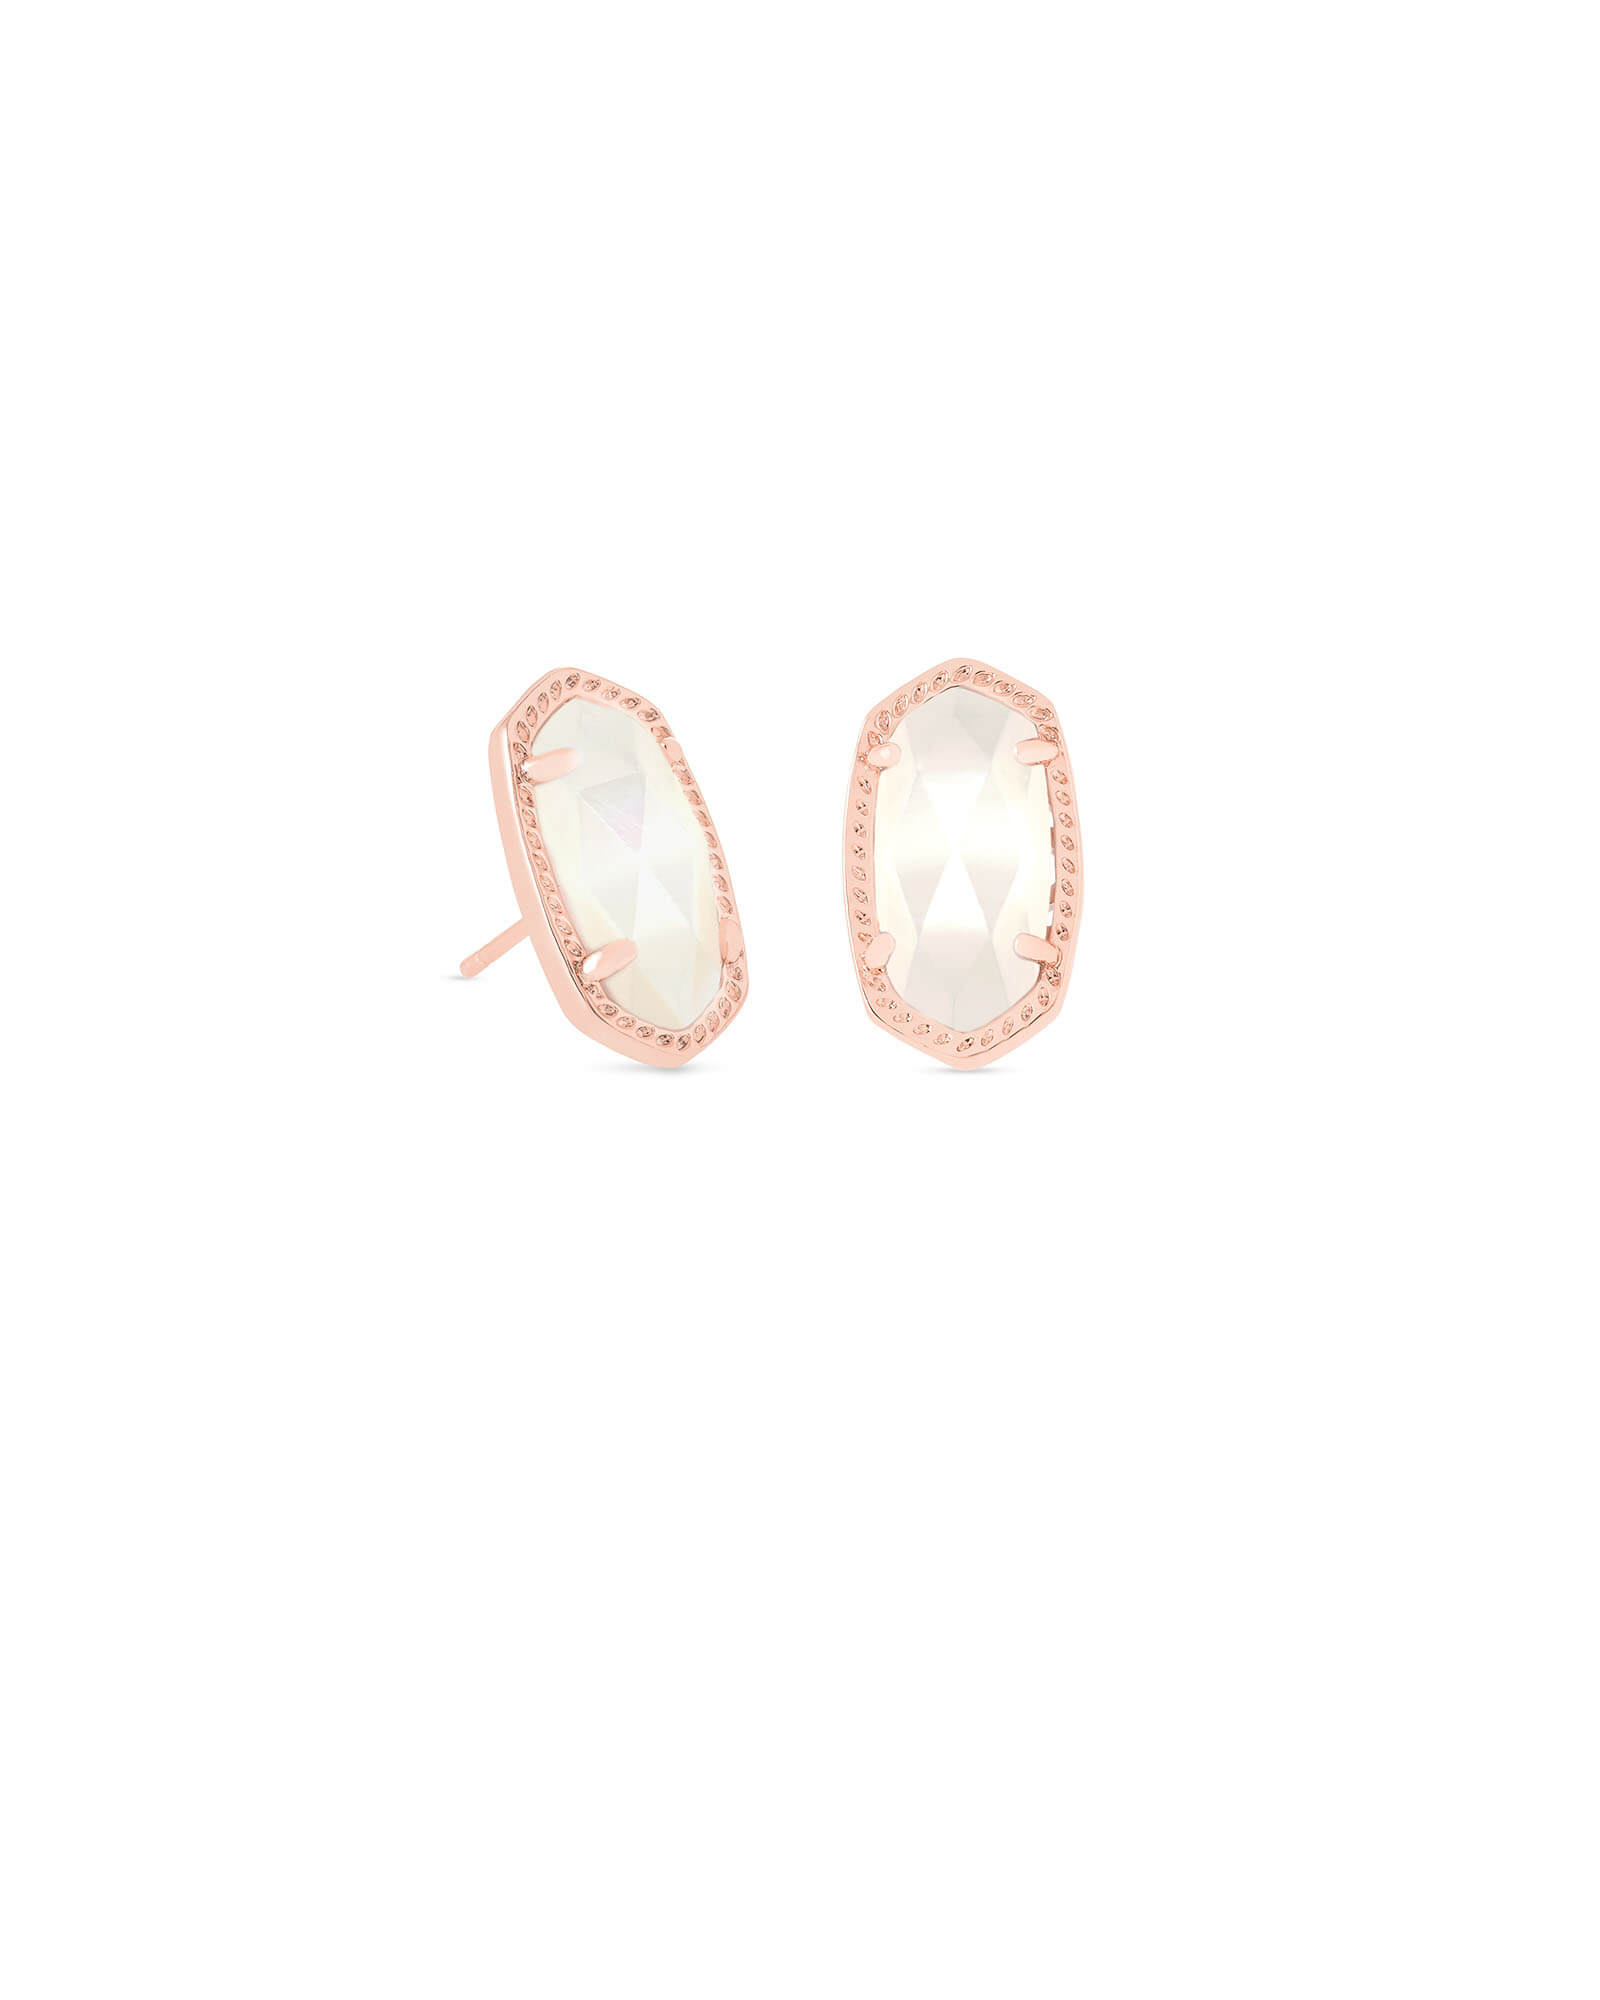 Kendra Scott Ellie Rose Gold Stud Earrings in Ivory Pearl | Mother Of Pearl